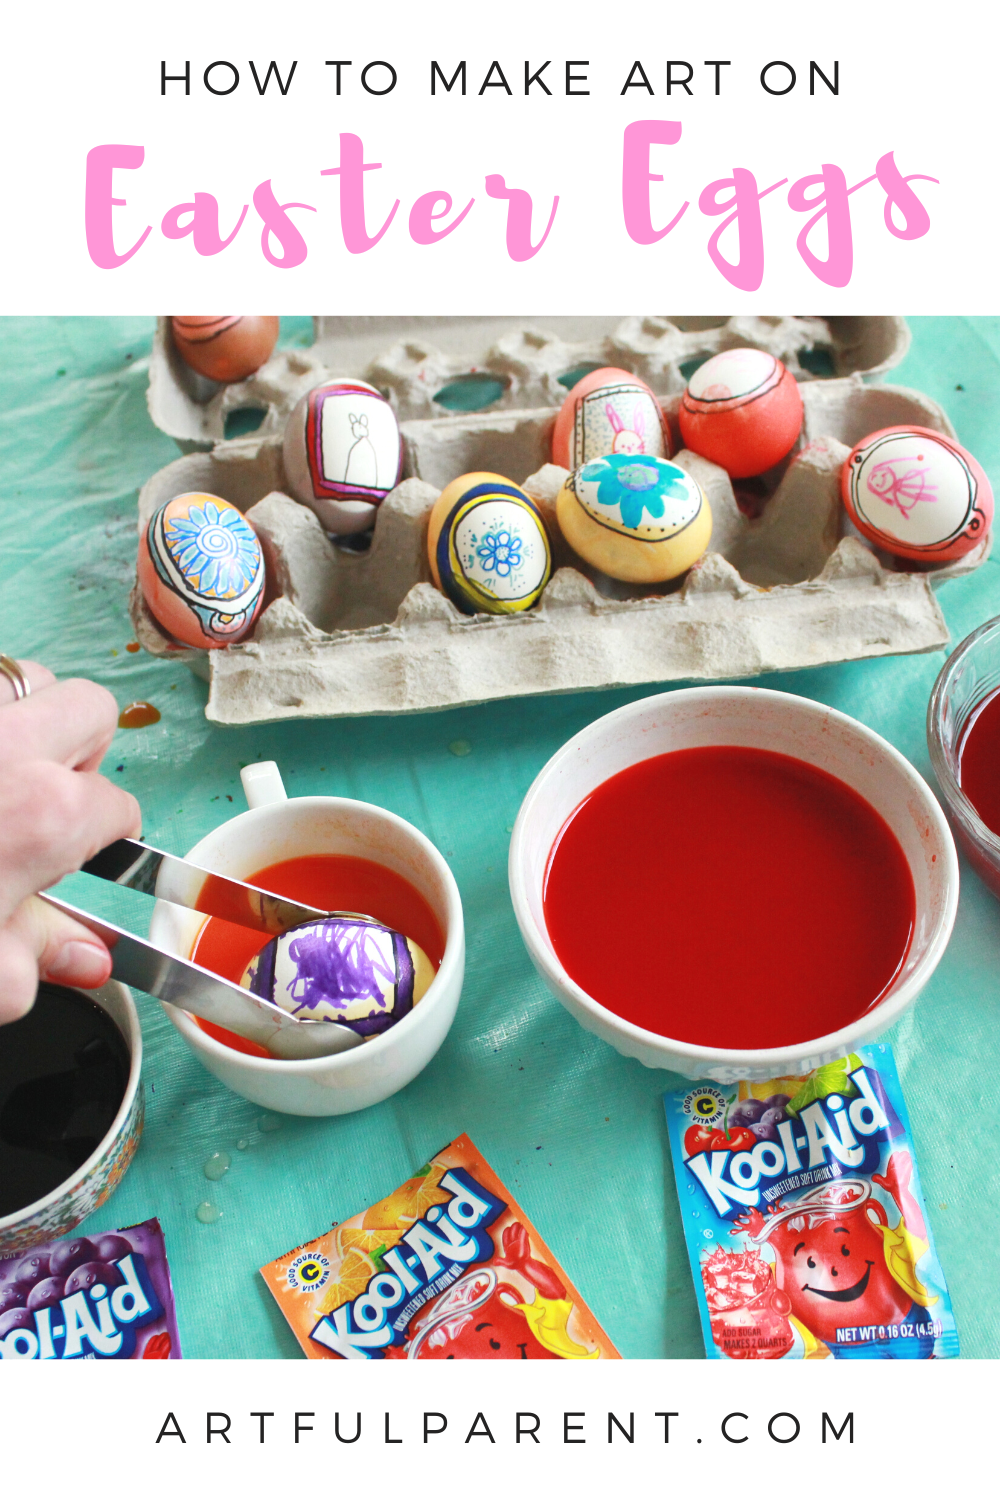 How to Make Art on Easter Eggs